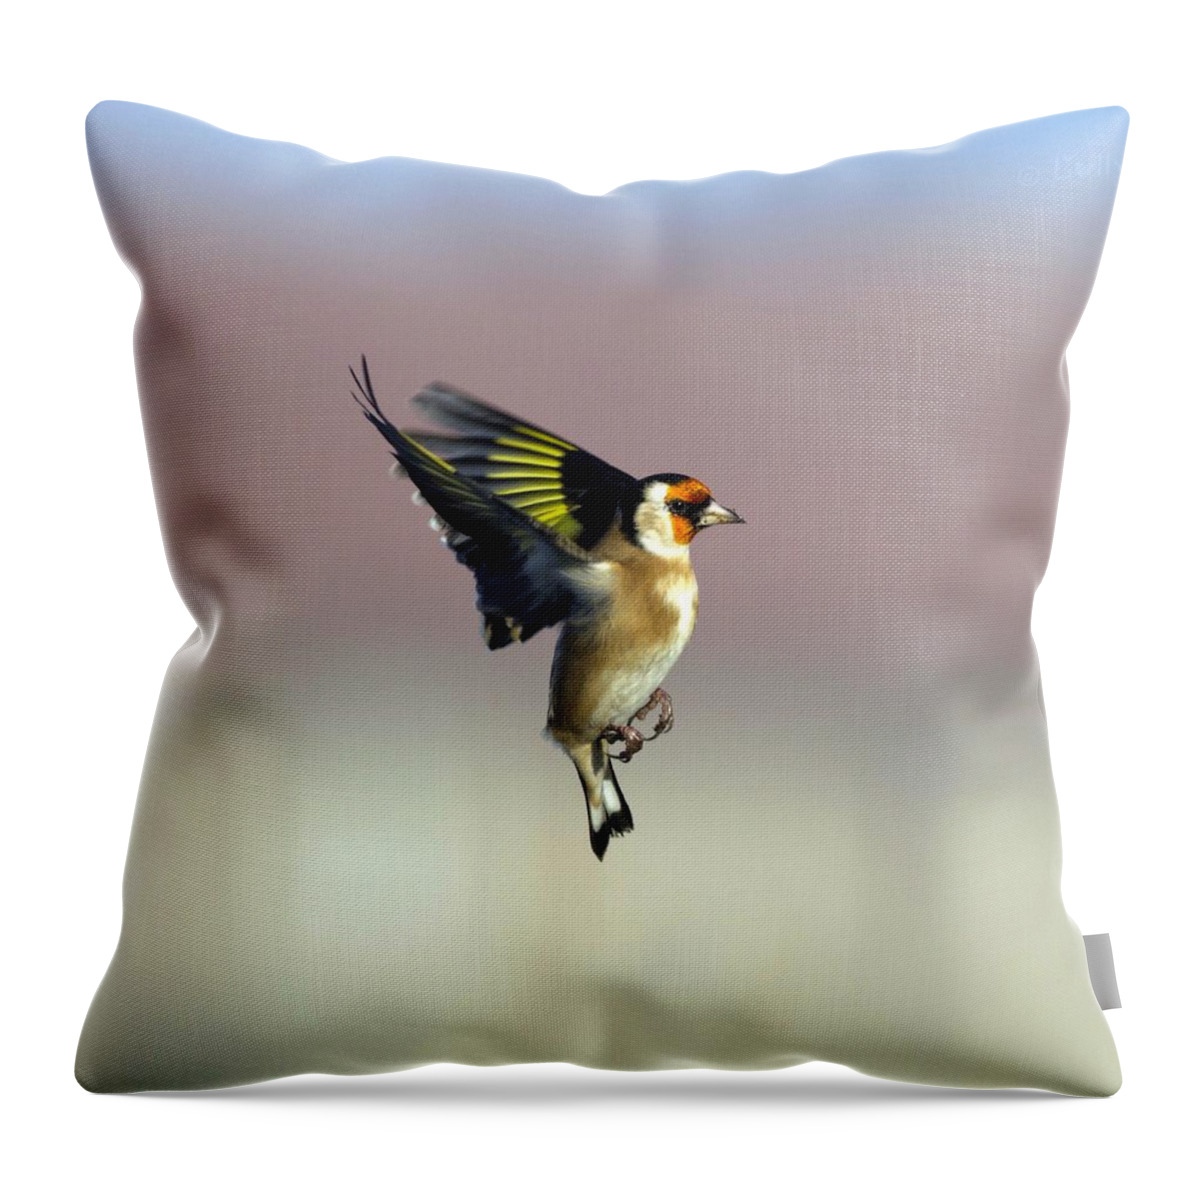 Photography Throw Pillow featuring the photograph Bird by Presilla Hadzhieva